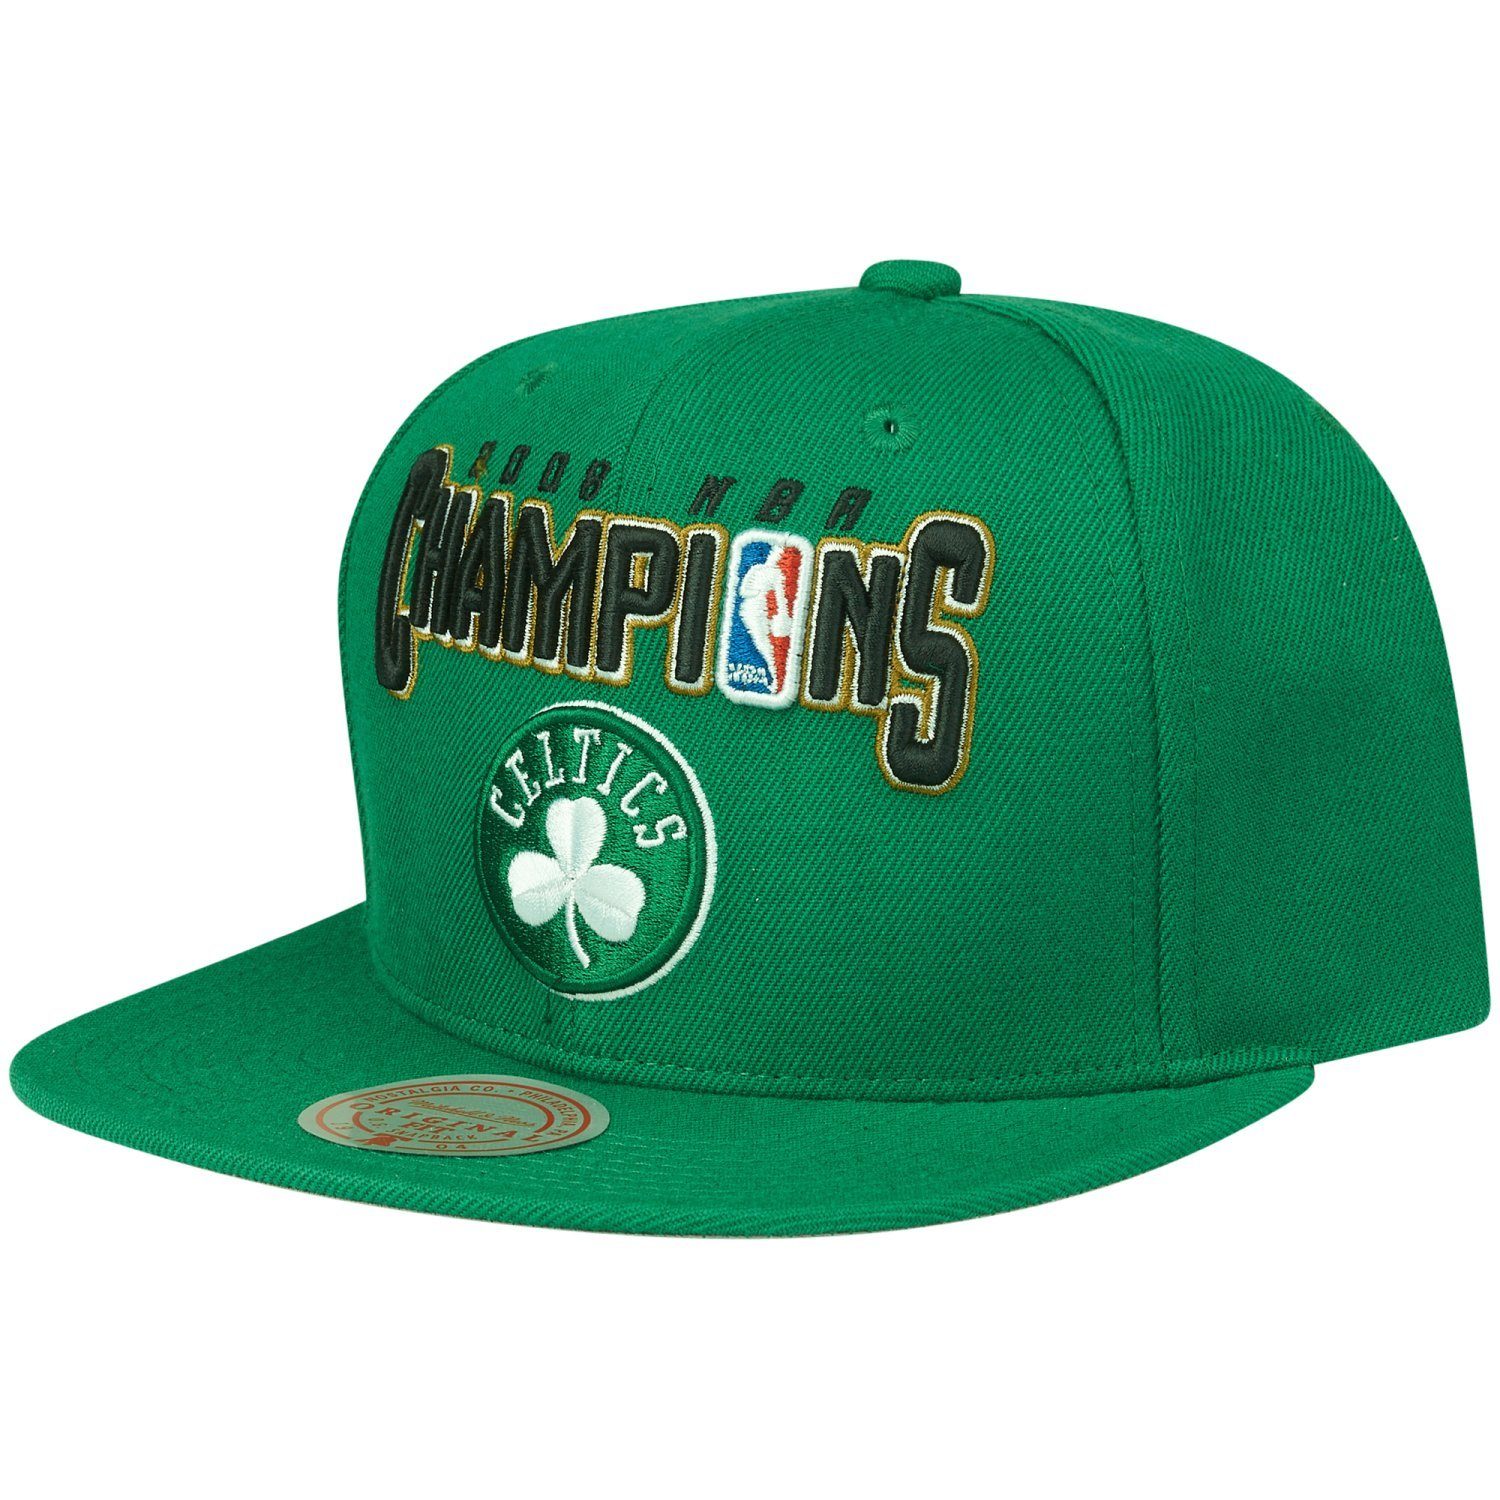 Mitchell & Ness Snapback Cap Boston Celtics 2008 Champions